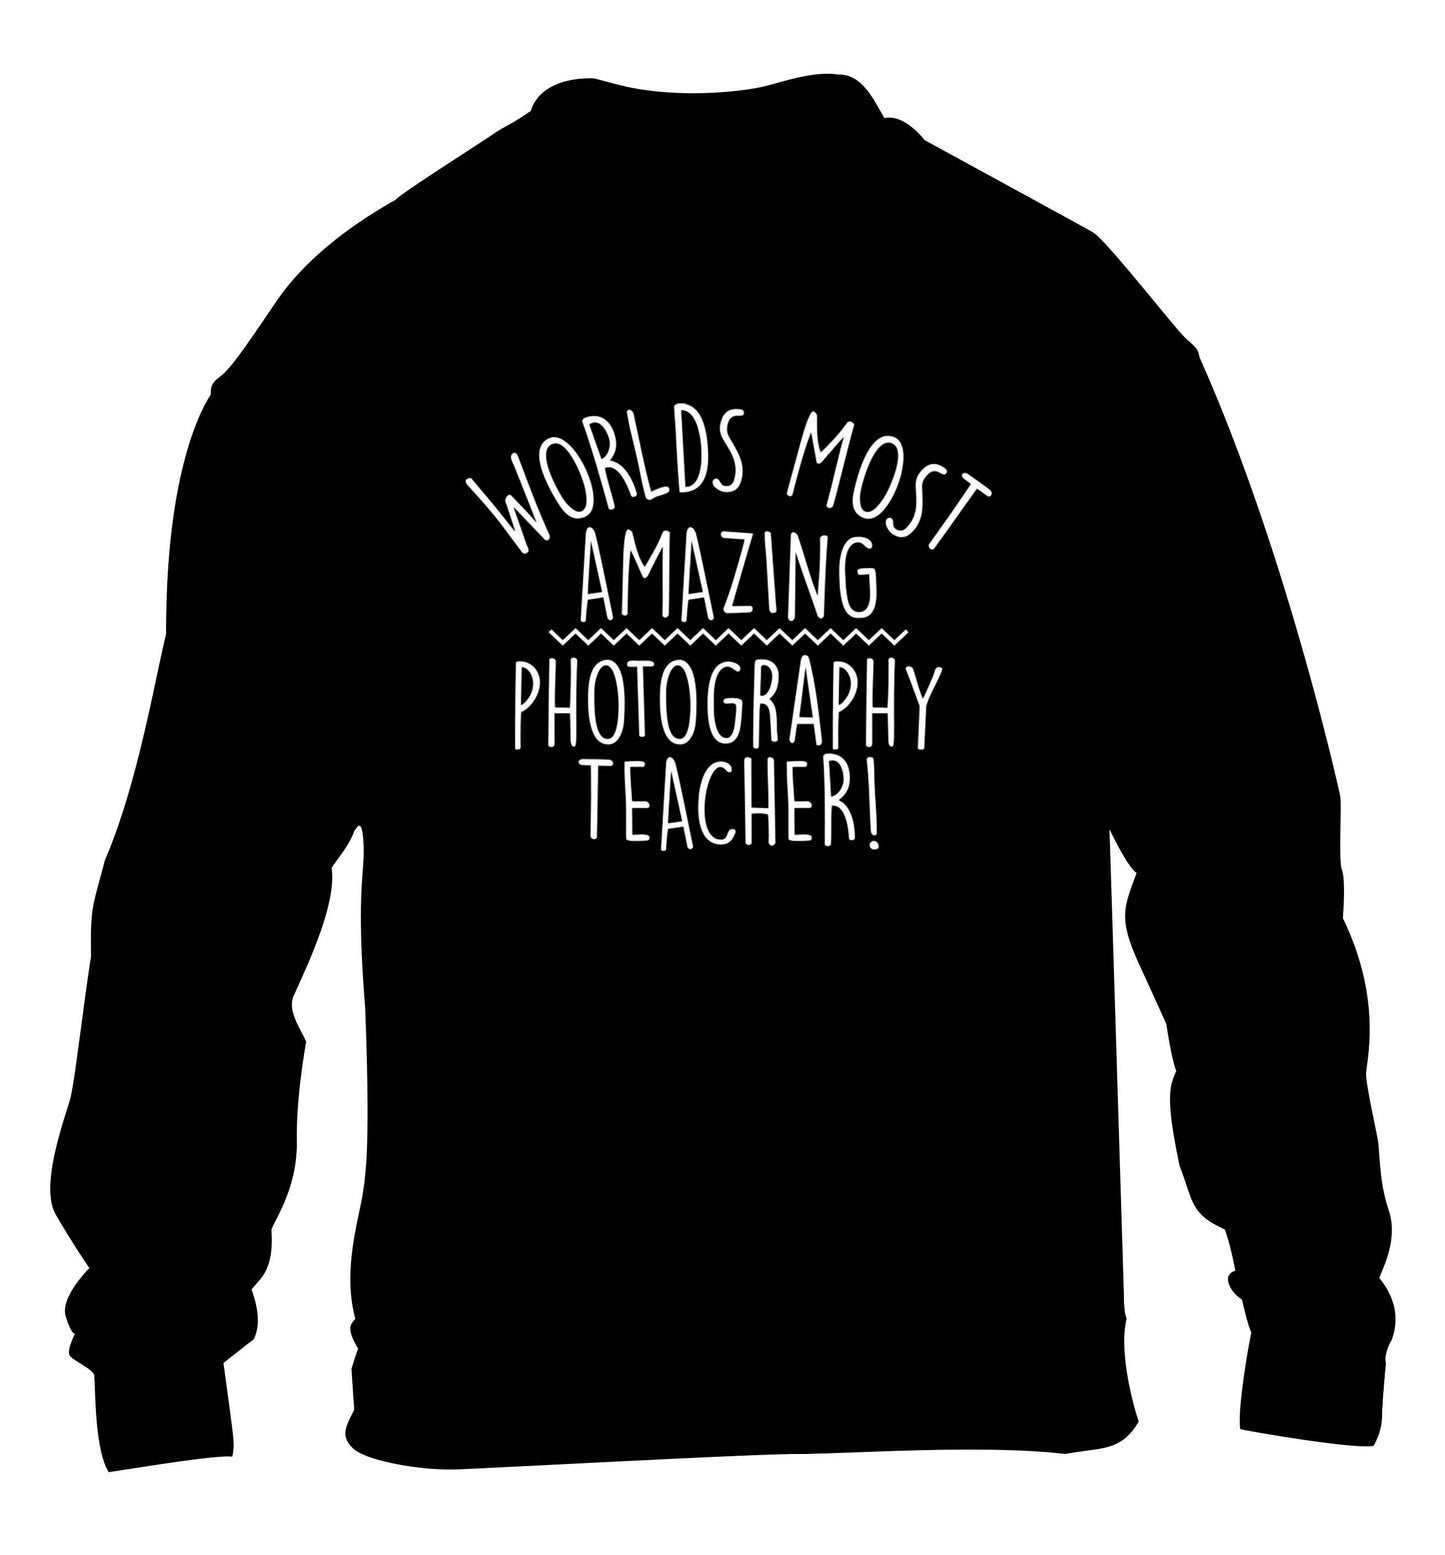 Worlds most amazing photography teacher children's black sweater 12-13 Years